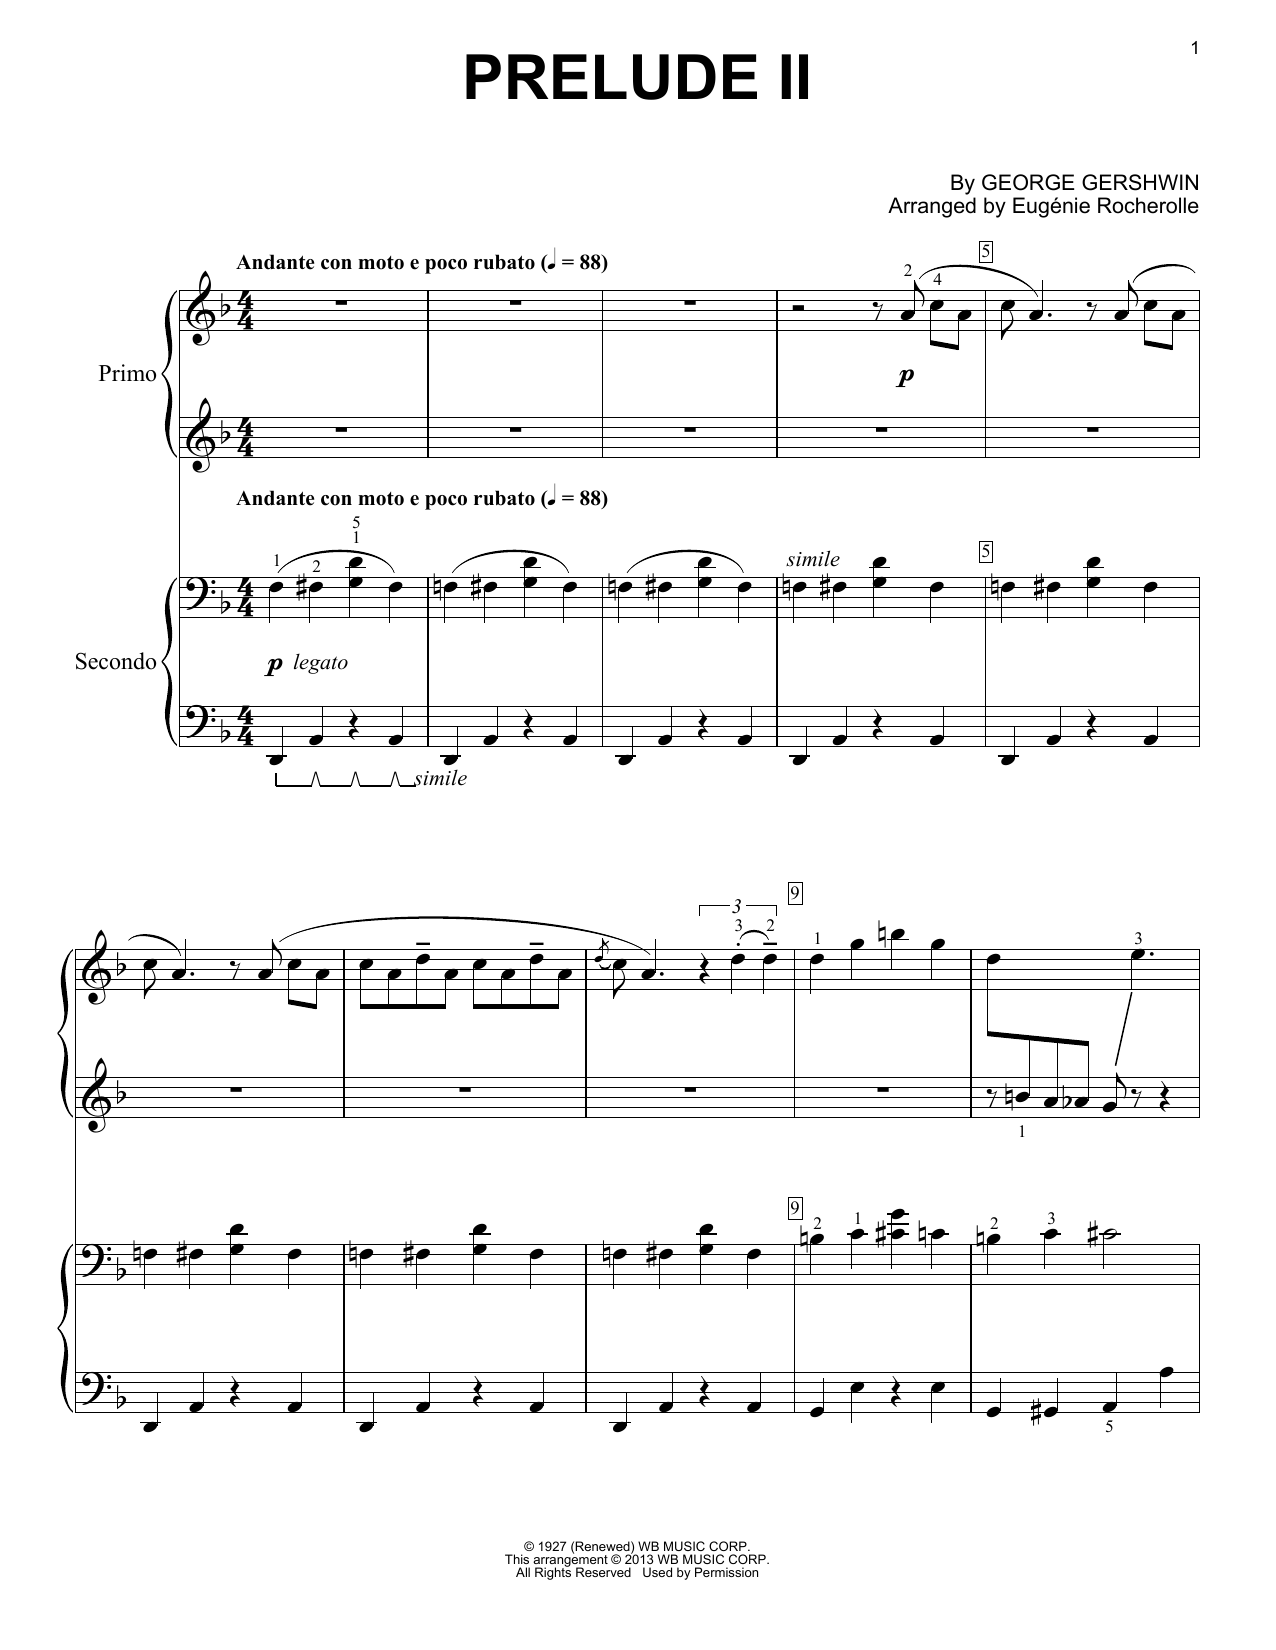 Download George Gershwin Prelude II (Andante Con Moto E Poco Rubato) Sheet Music and learn how to play Piano Duet PDF digital score in minutes